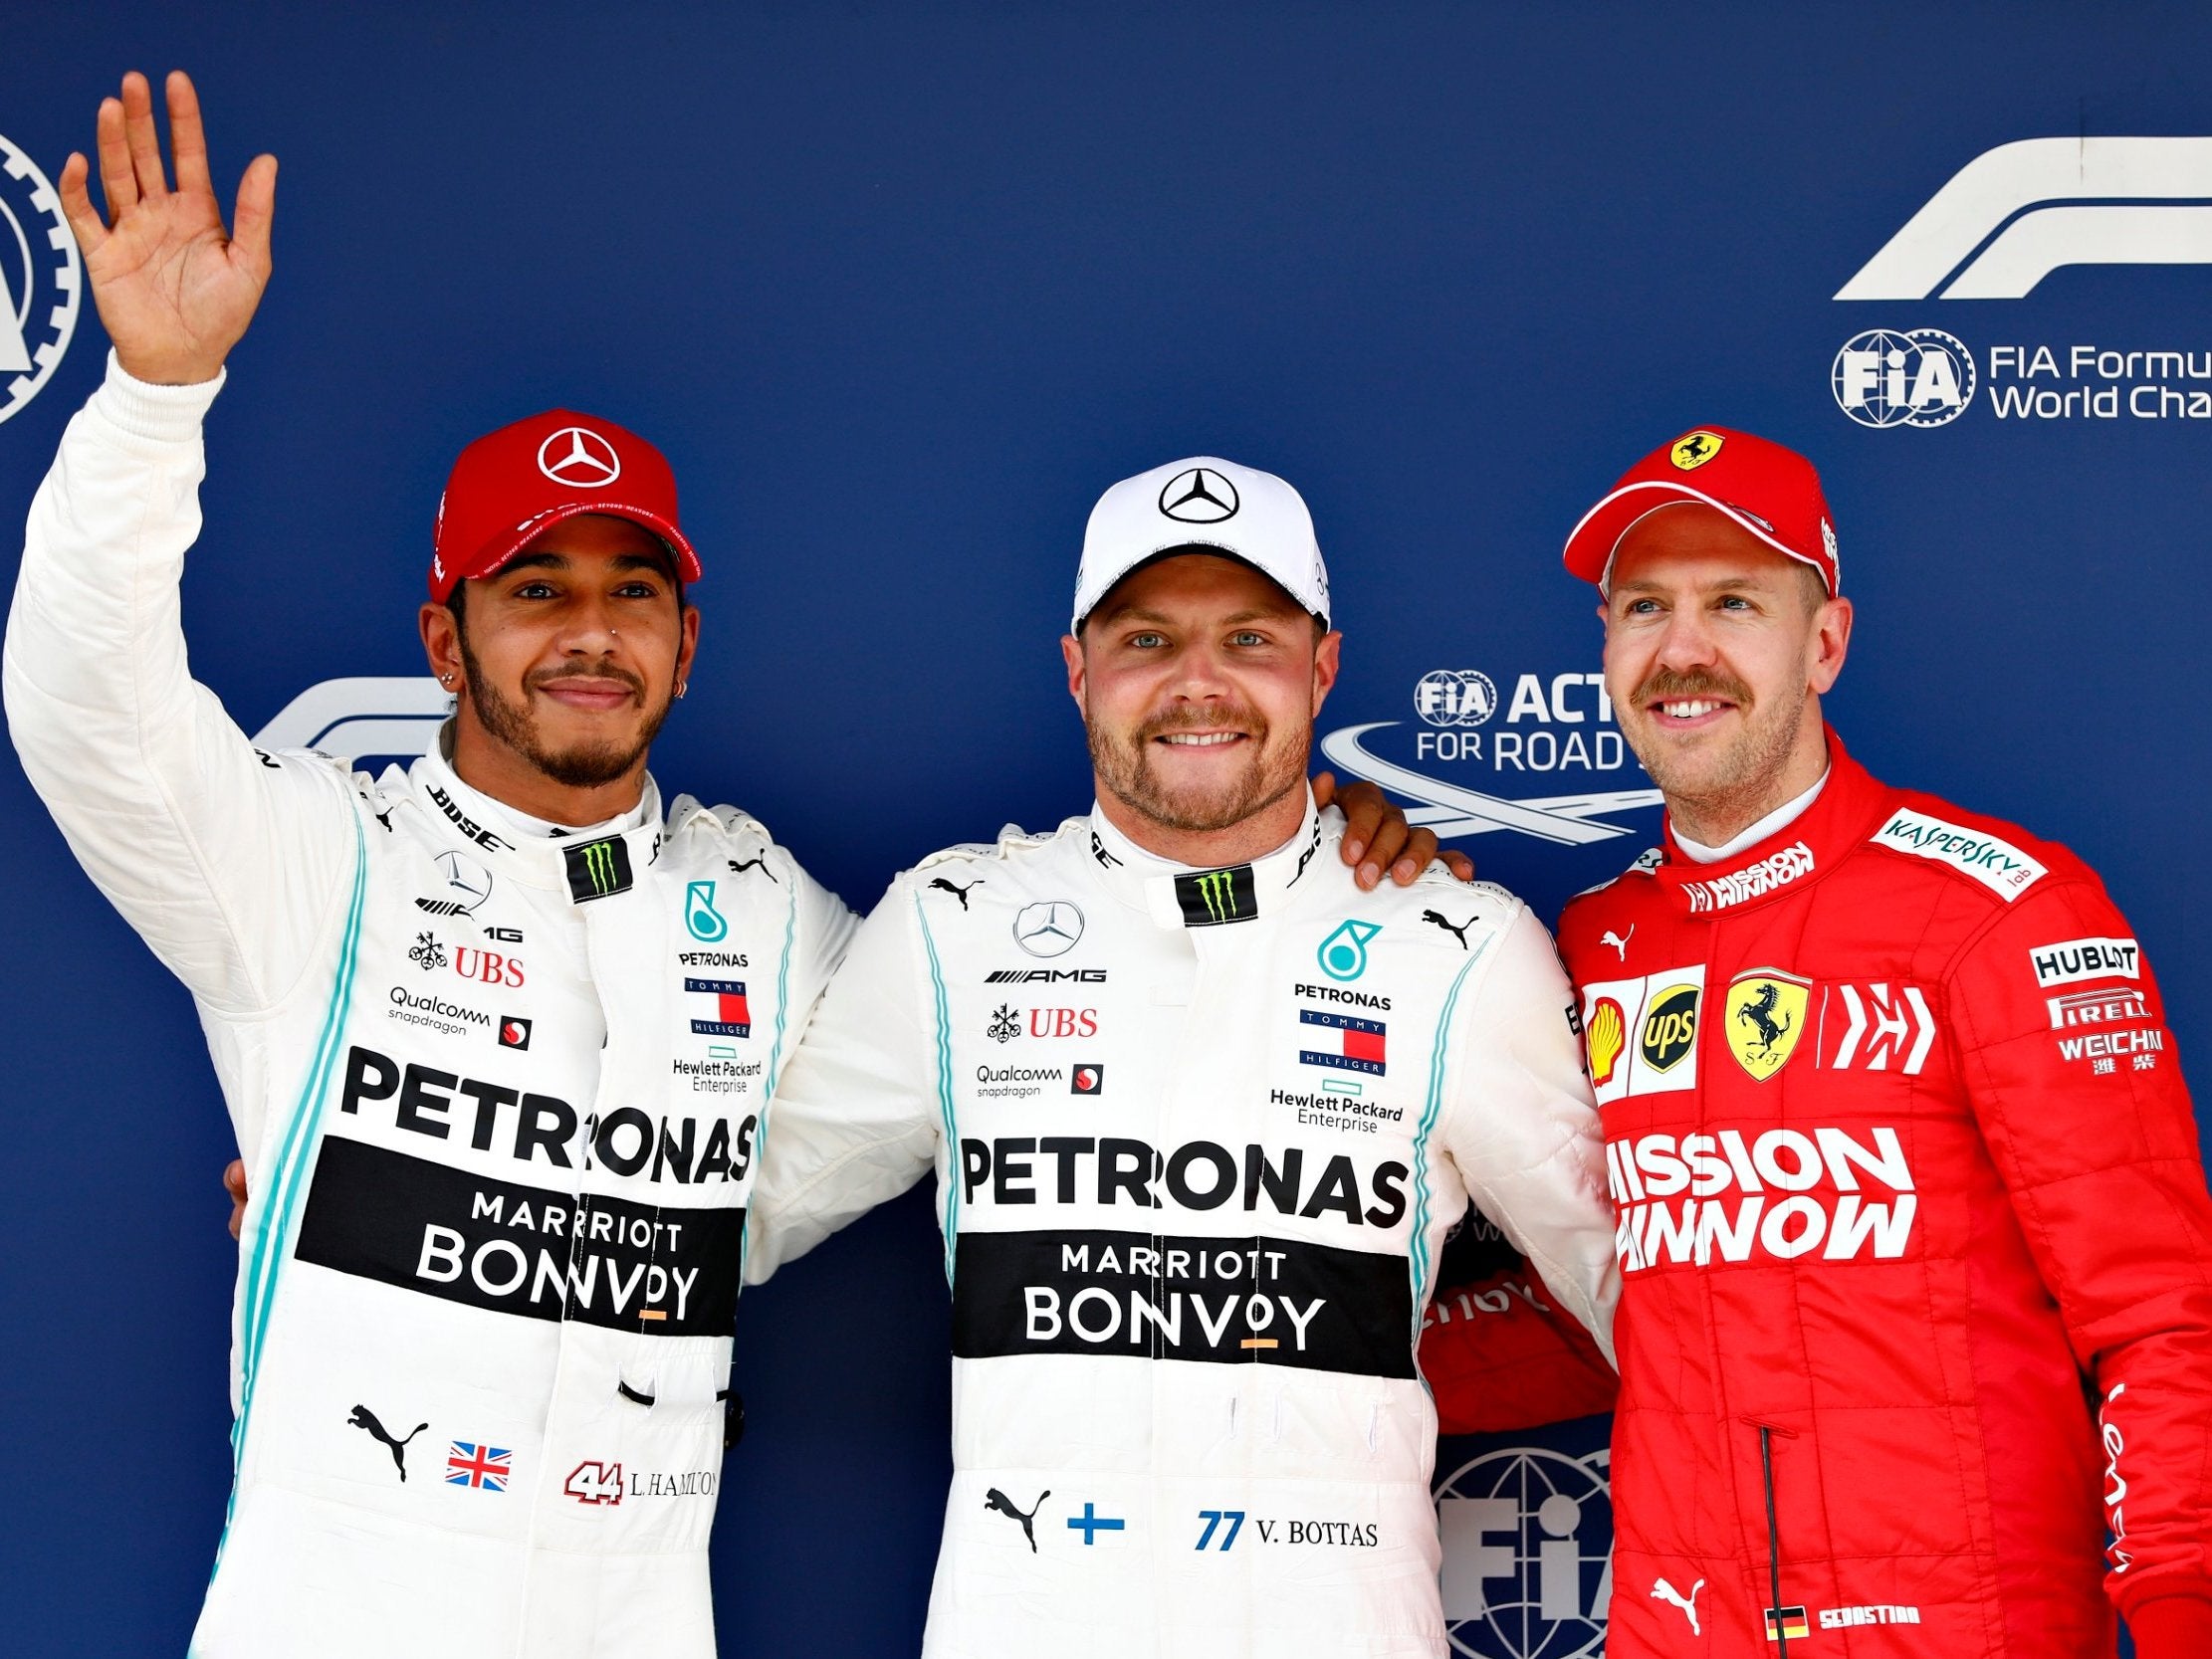 Bottas starts ahead of Lewis Hamilton and Sebastian Vettel on the grid (Getty Images)